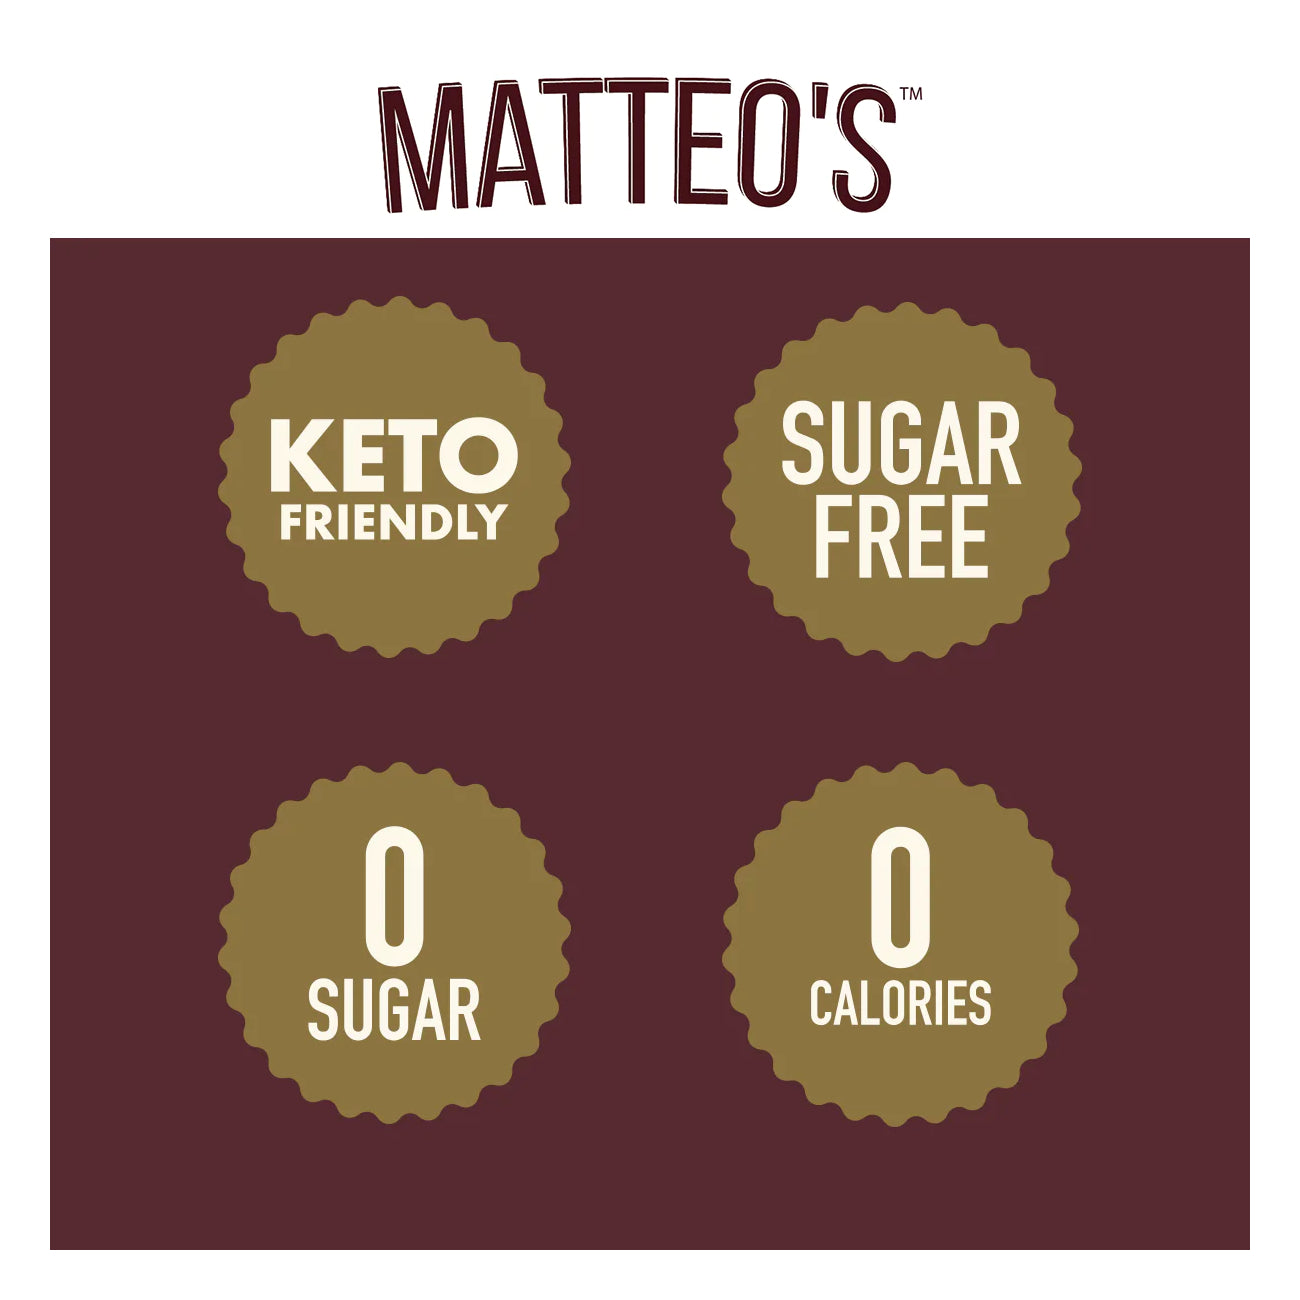 Matteo's Coffee Syrup Sugar Free Hazelnut Chai / 750ml